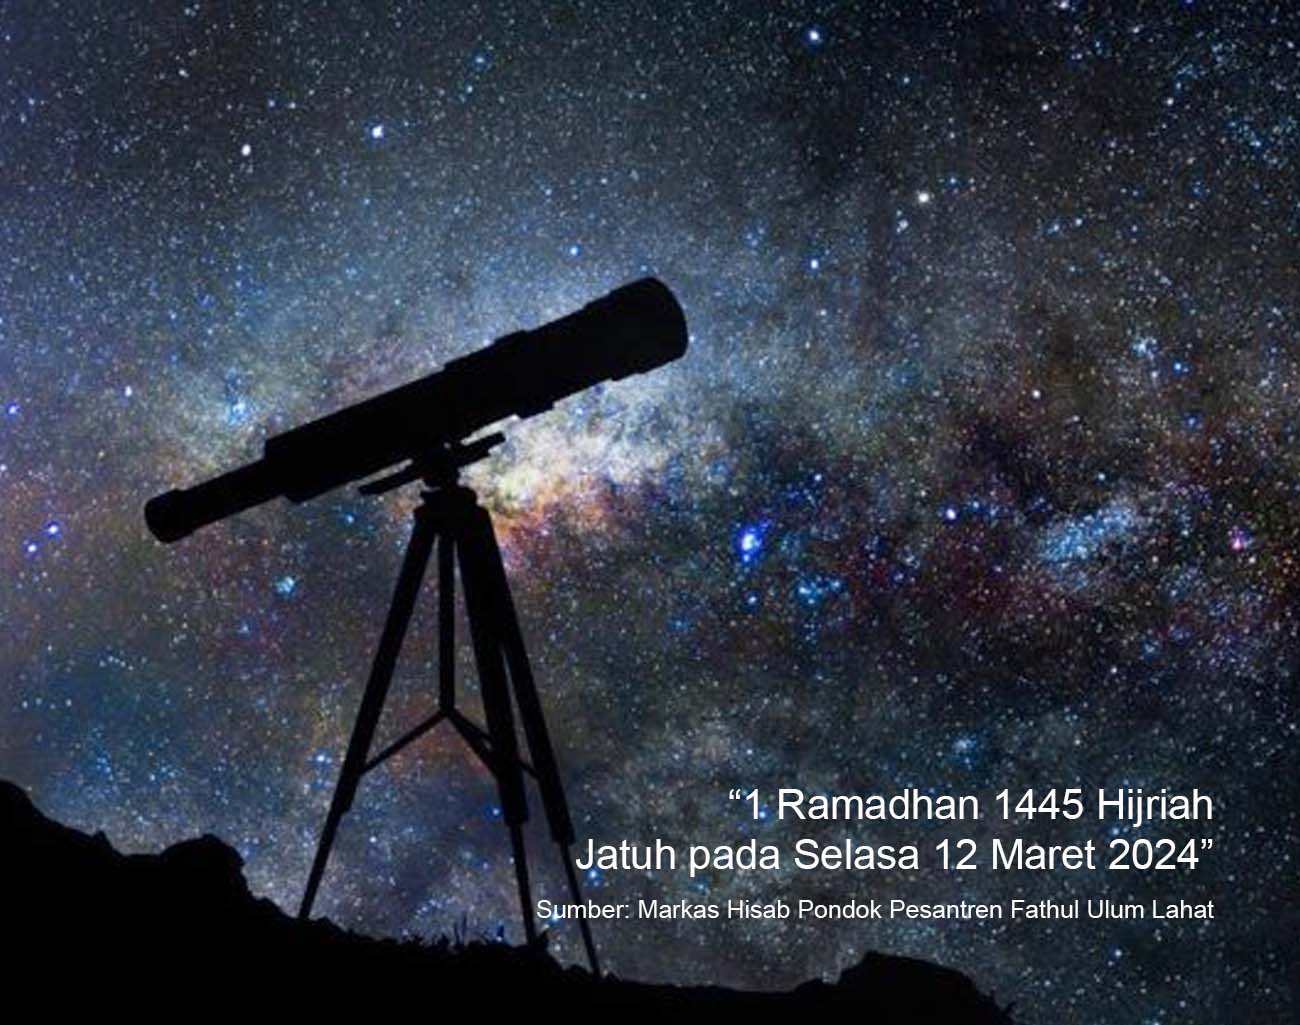 Markas Hisab Pondok Pesantren Fathul Ulum Lahat: 1 Ramadhan 1445 Hijriah Jatuh pada Selasa 12 Maret 2024